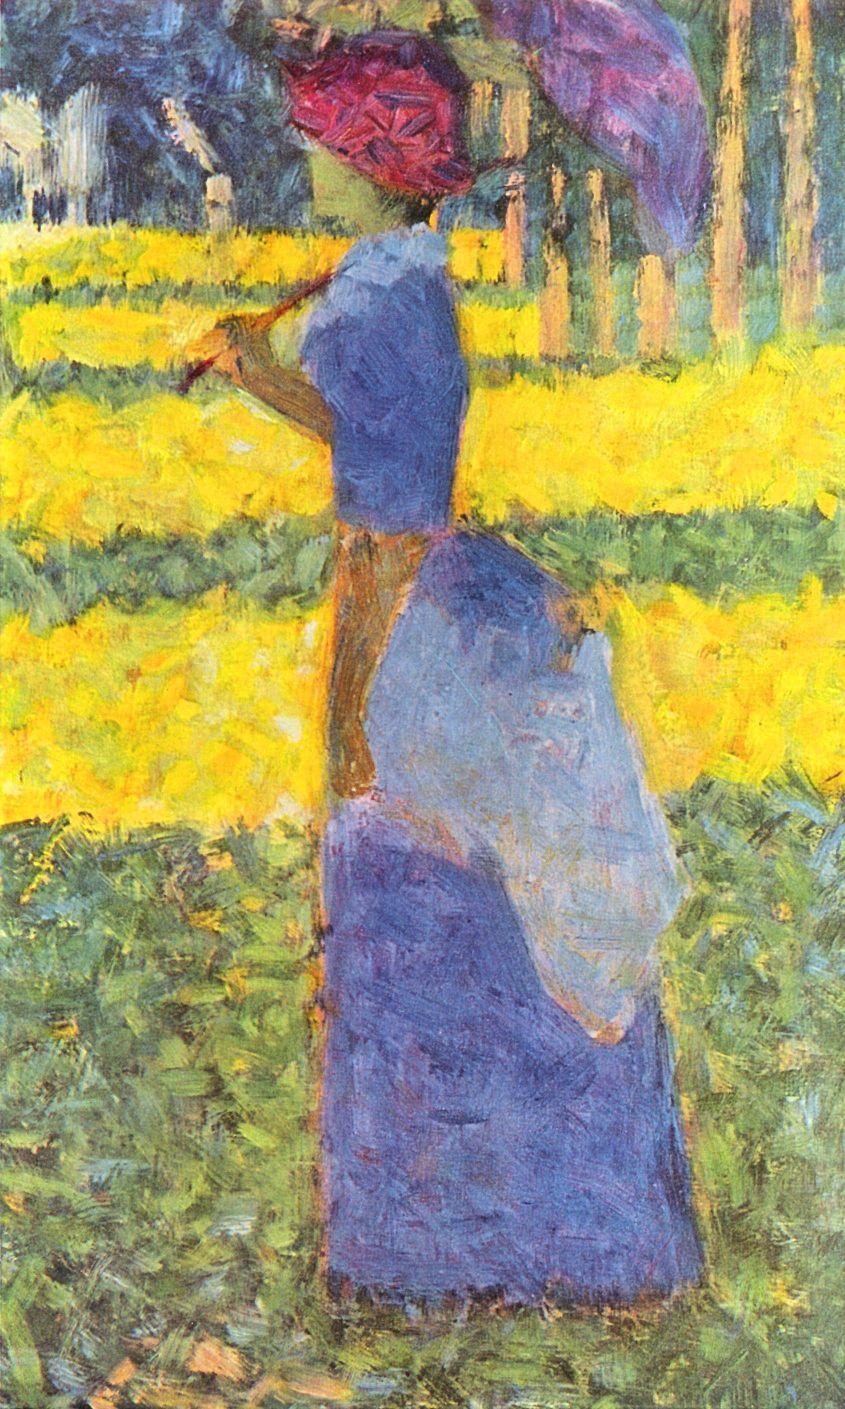 Seurat - Woman with Parasol by Seurat